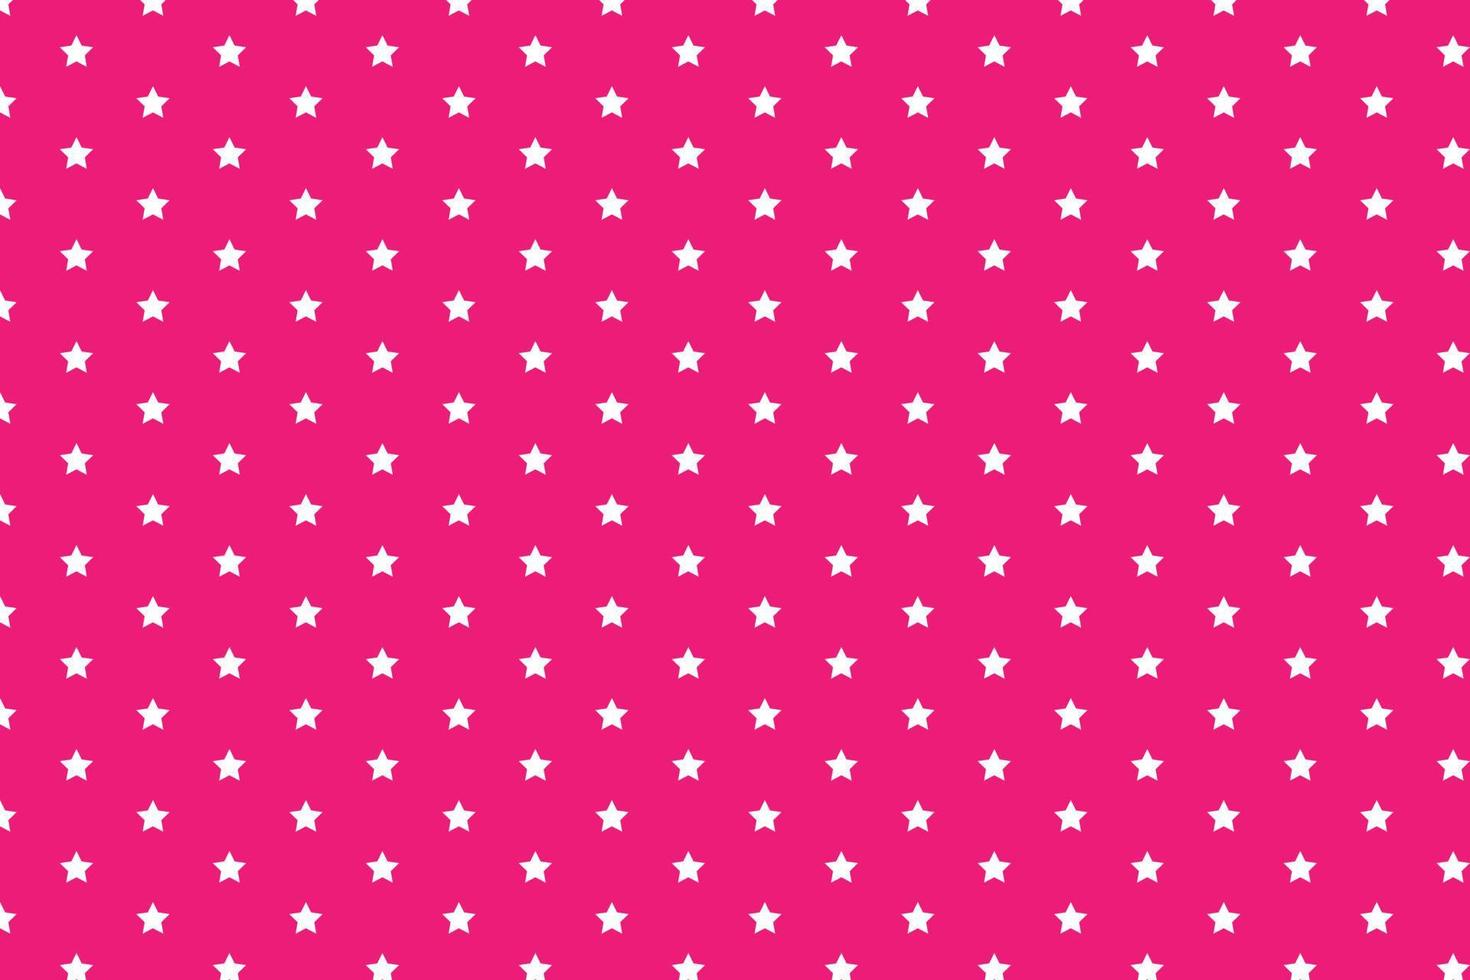 abstract wit ster Aan roze achtergrond patroon ontwerp. vector